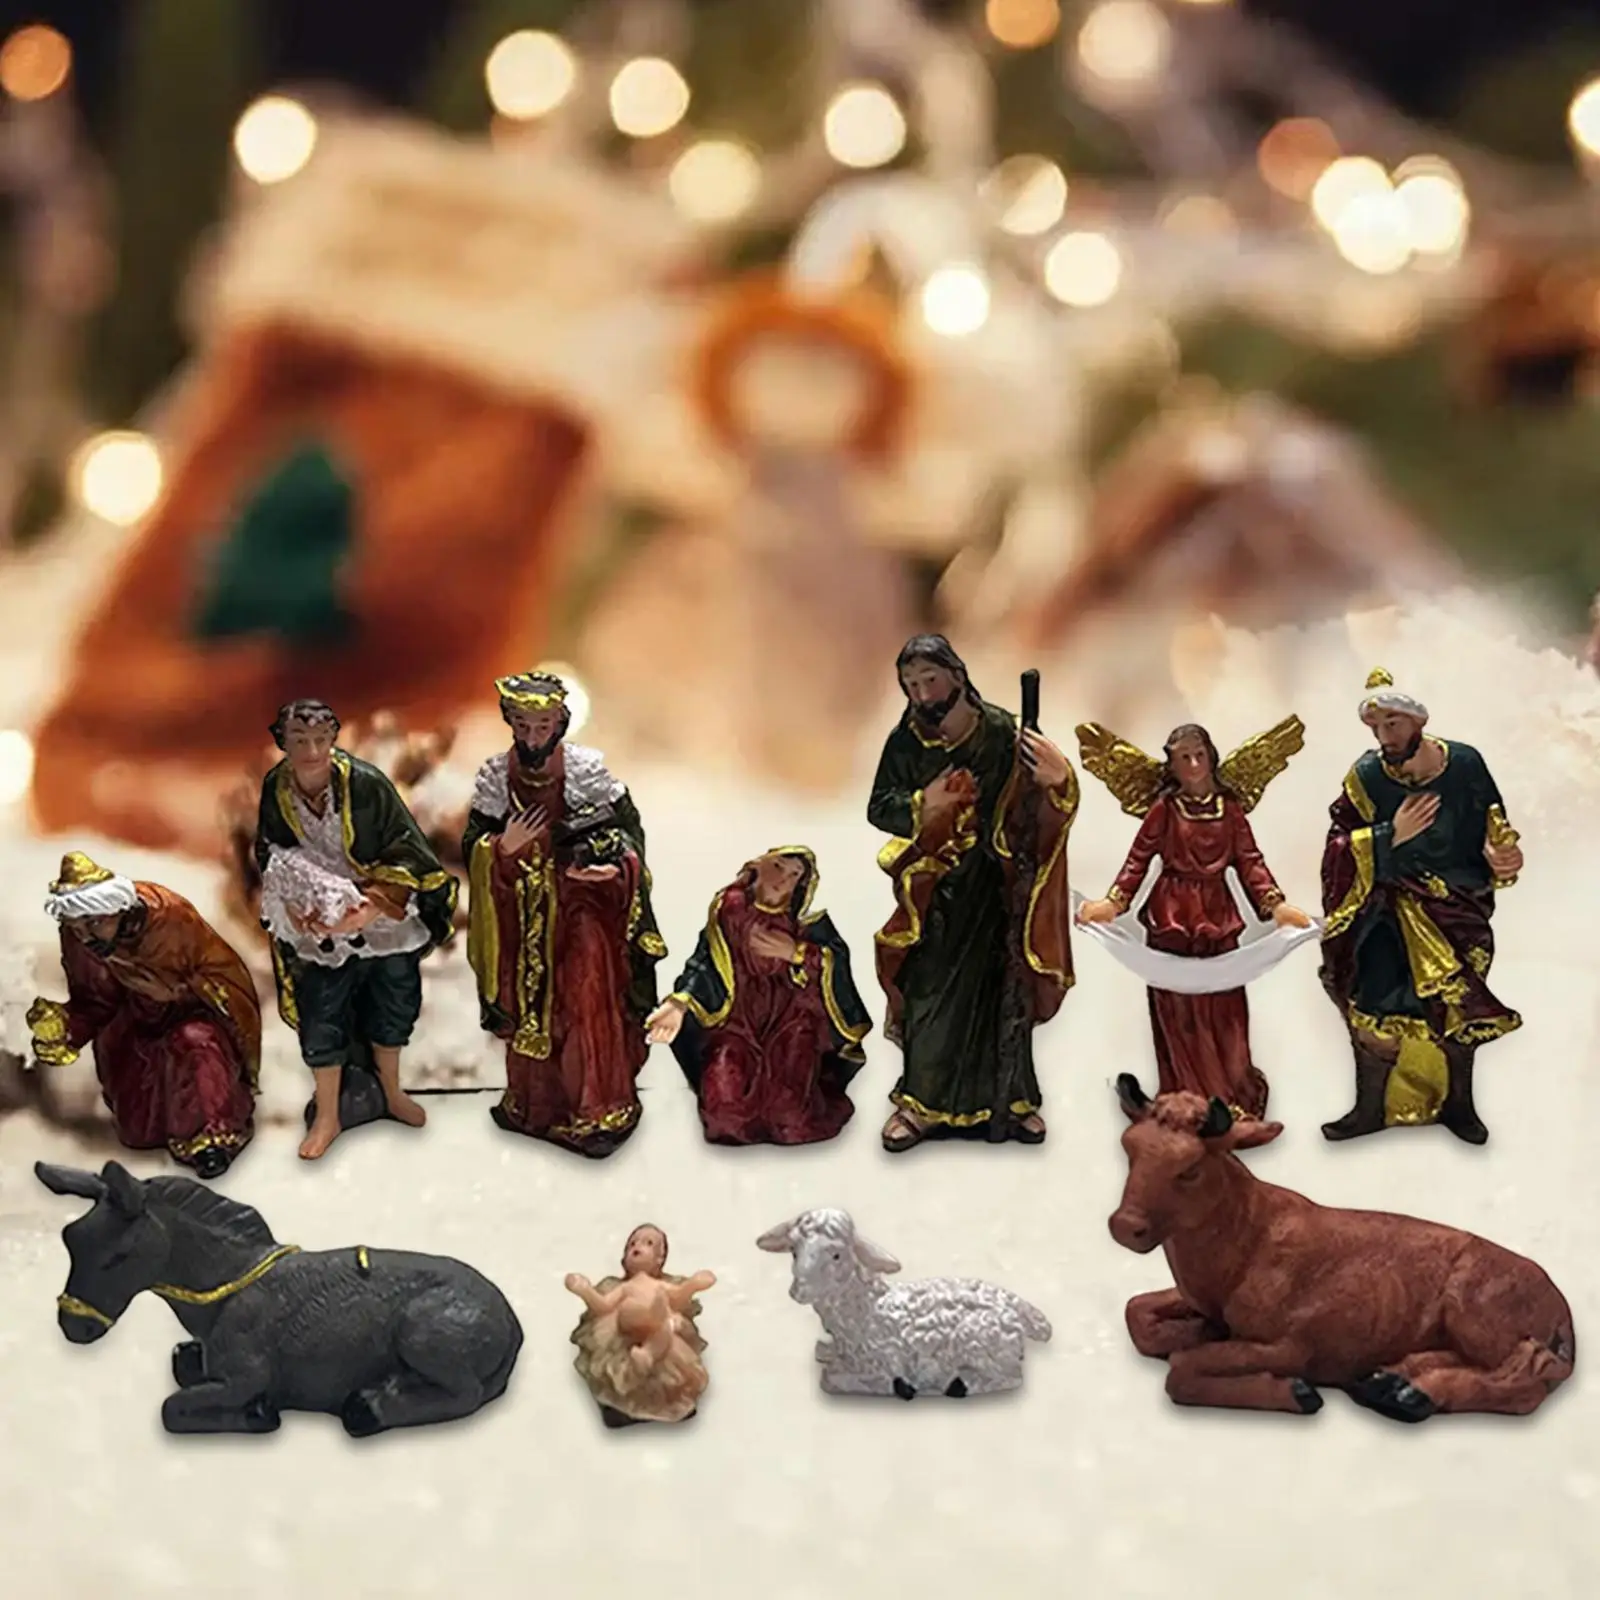 11 Pieces Nativity Scene Figures Tabletop Ornament Crafts Retro Style